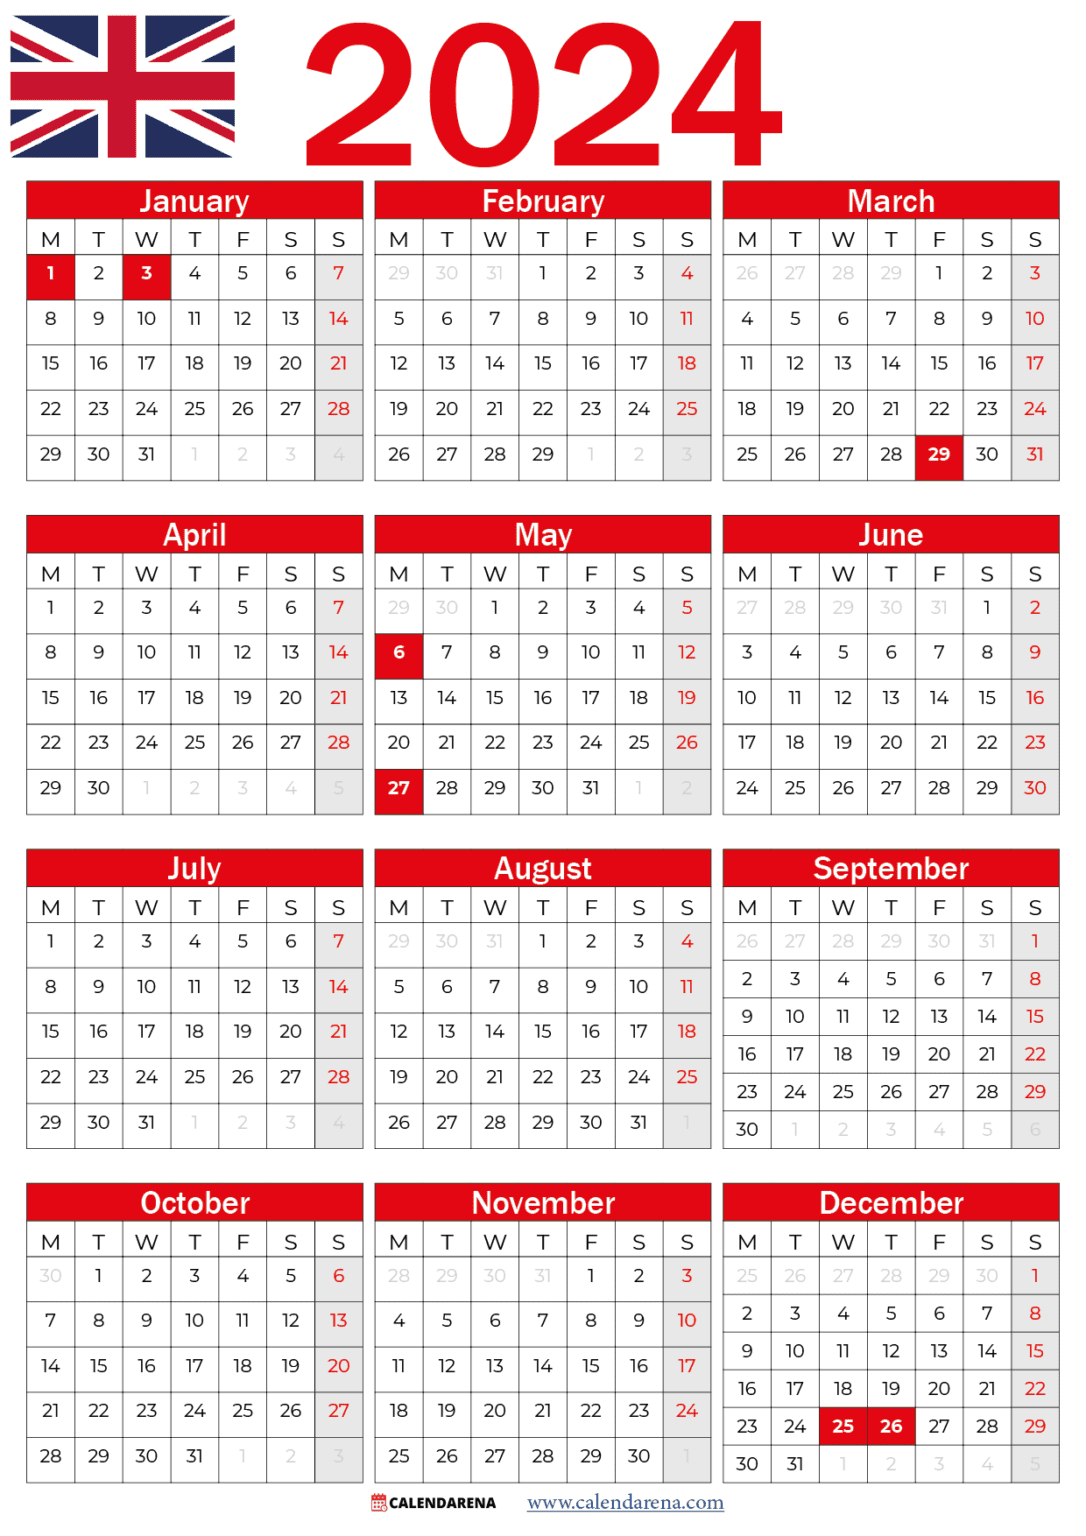 2024 Calendar Uk With Bank Holidays Printable Jan 2024 Calendar - Free Printable 2024 Calendar With Bank Holidays UK